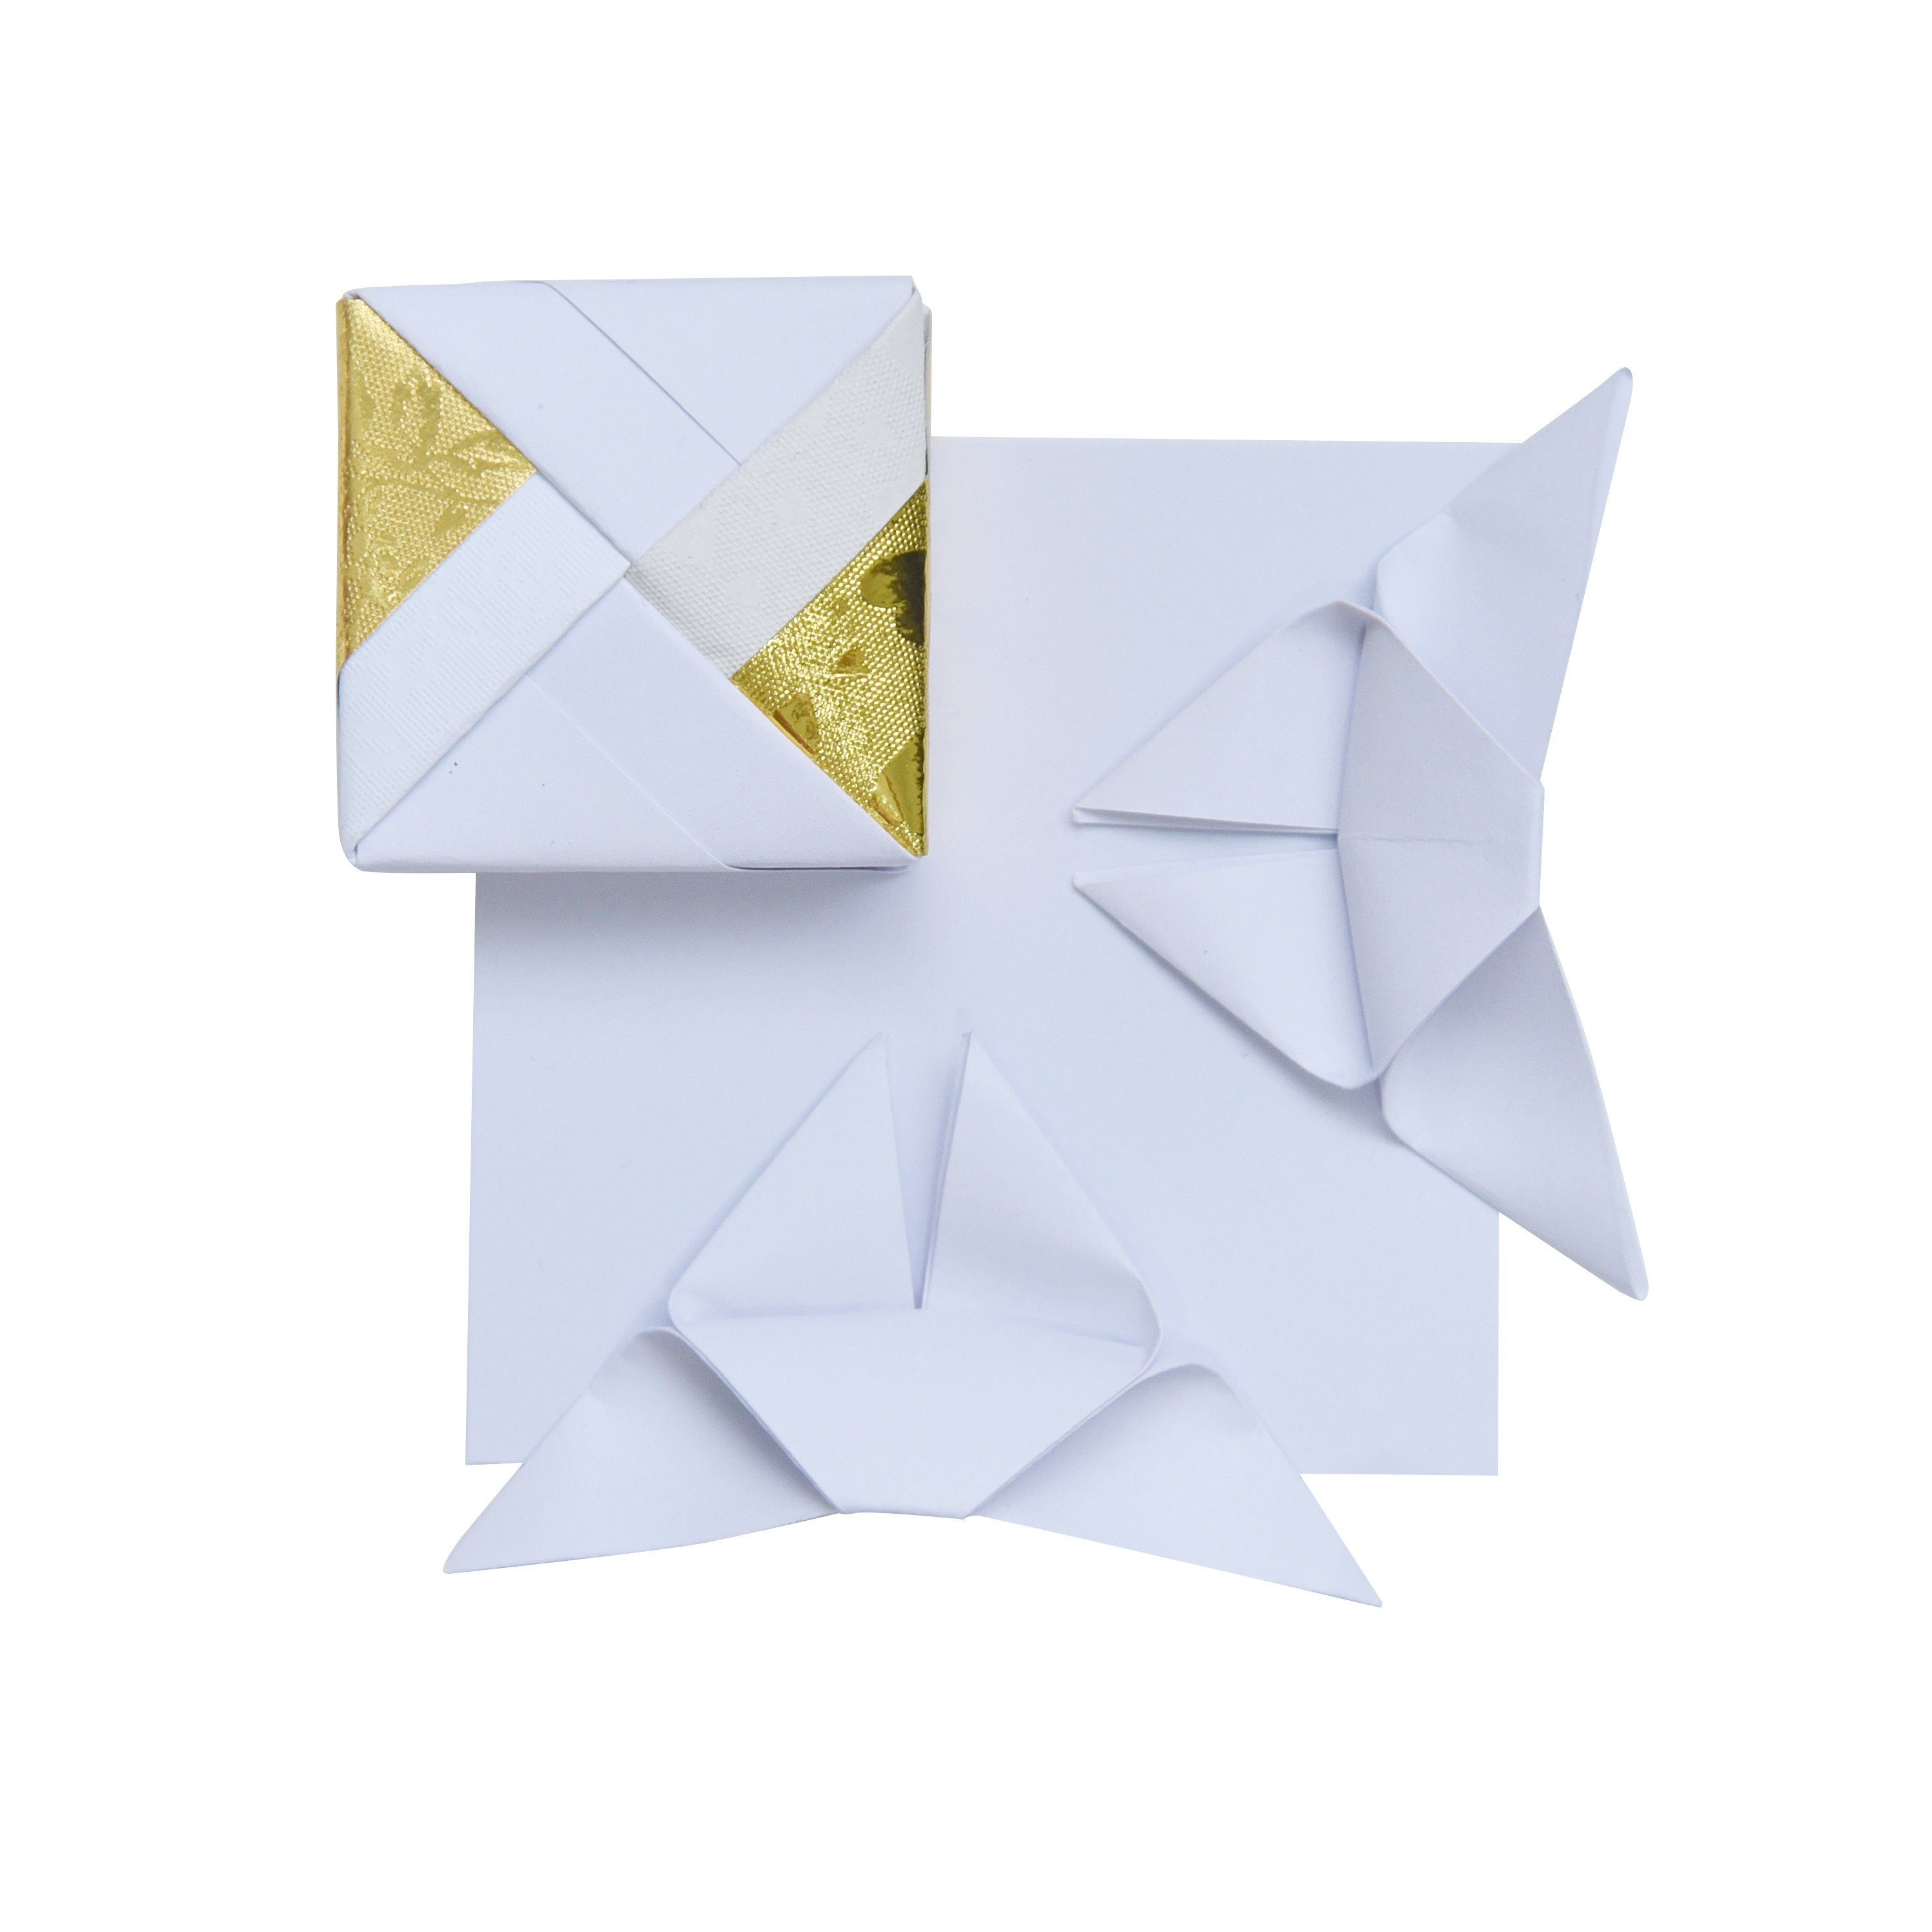 1000 fogli di carta origami bianchi - 3x3 pollici - Confezione di carta quadrata per piegare, gru origami e decorazioni